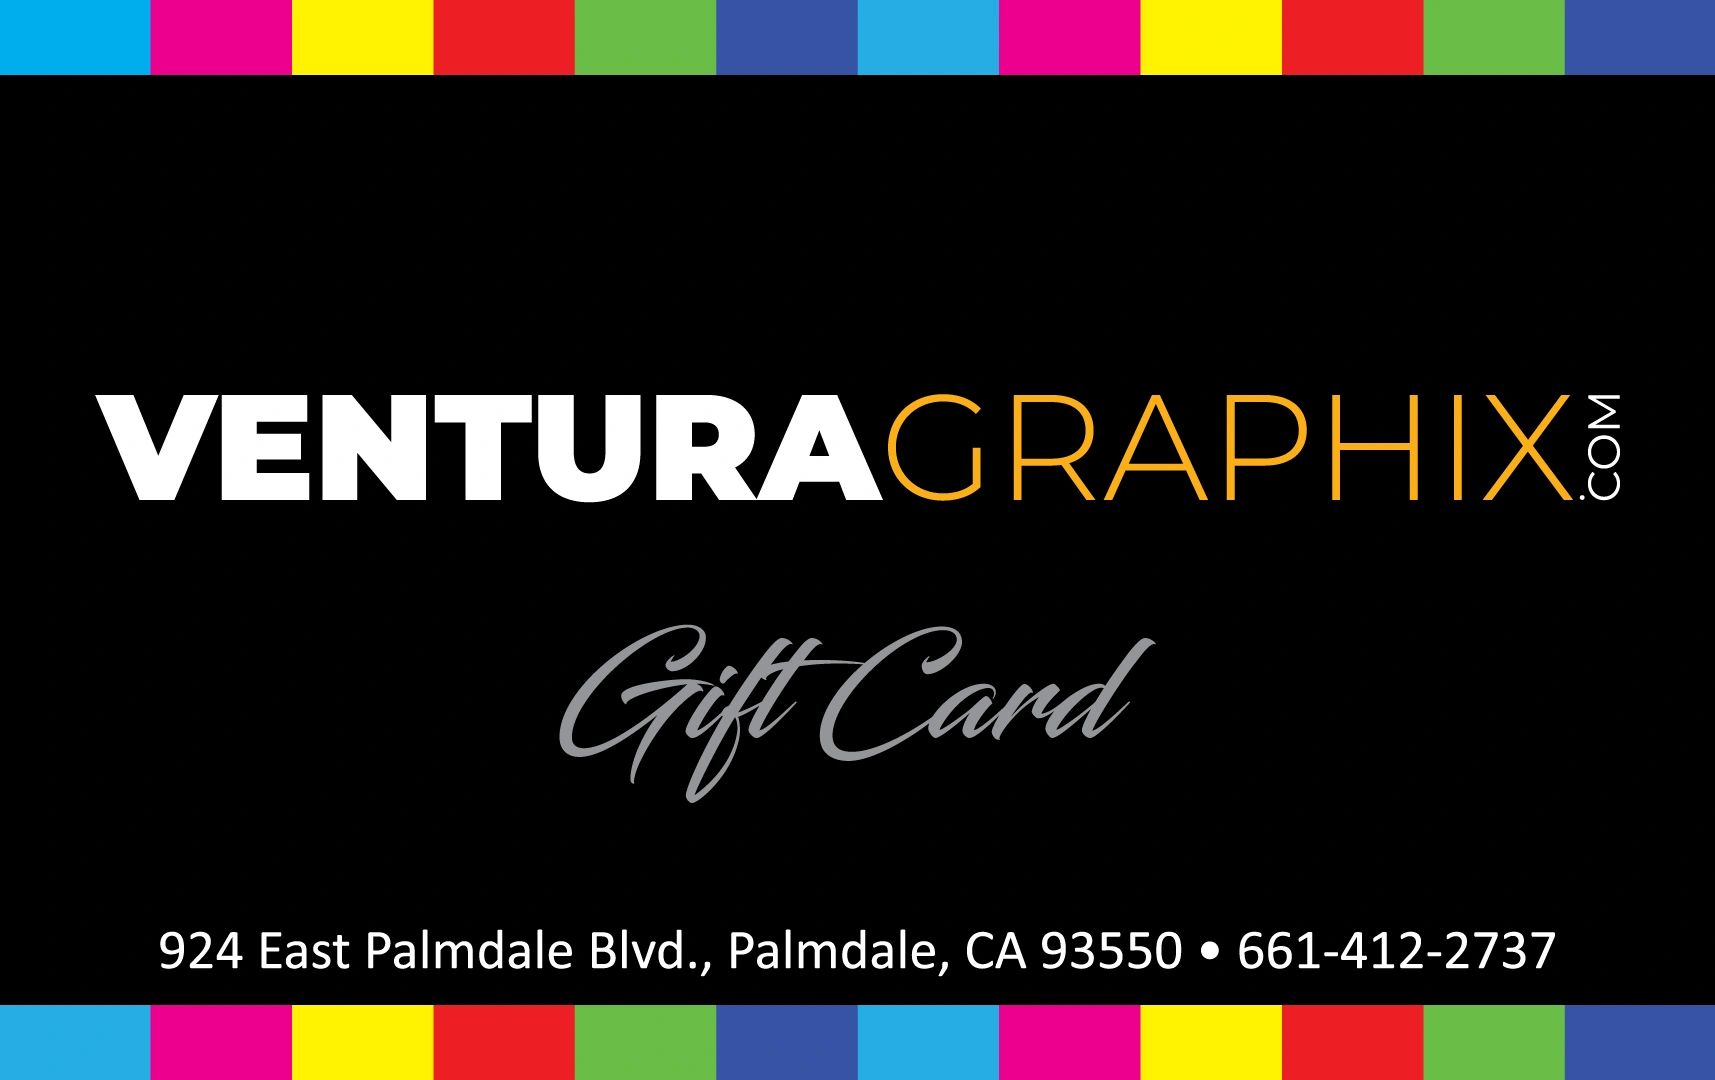 image of an actual Ventura Graphix gift card